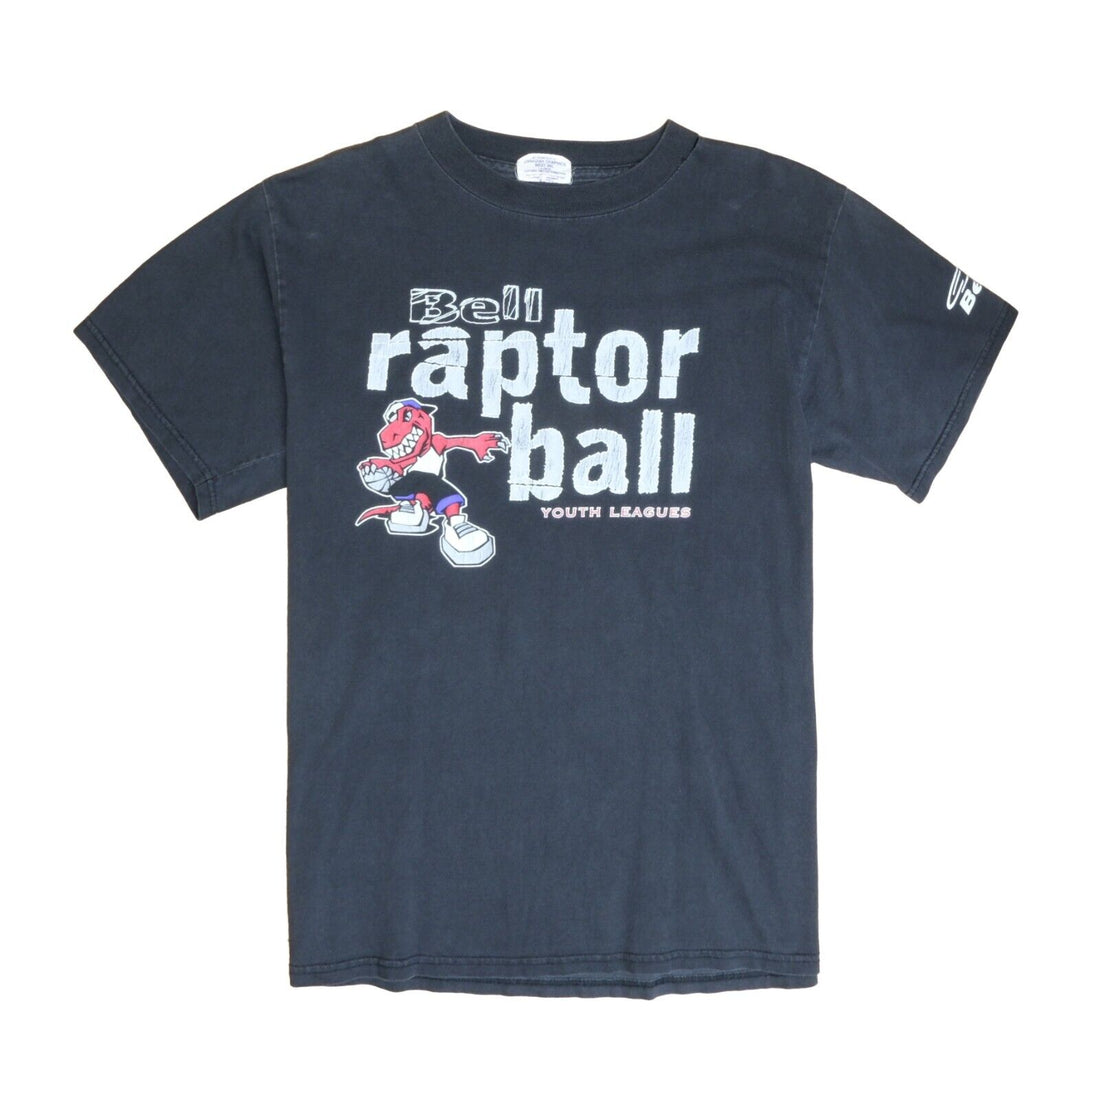 Vintage Toronto Raptors Bell Youth League T-Shirt Size Medium NBA